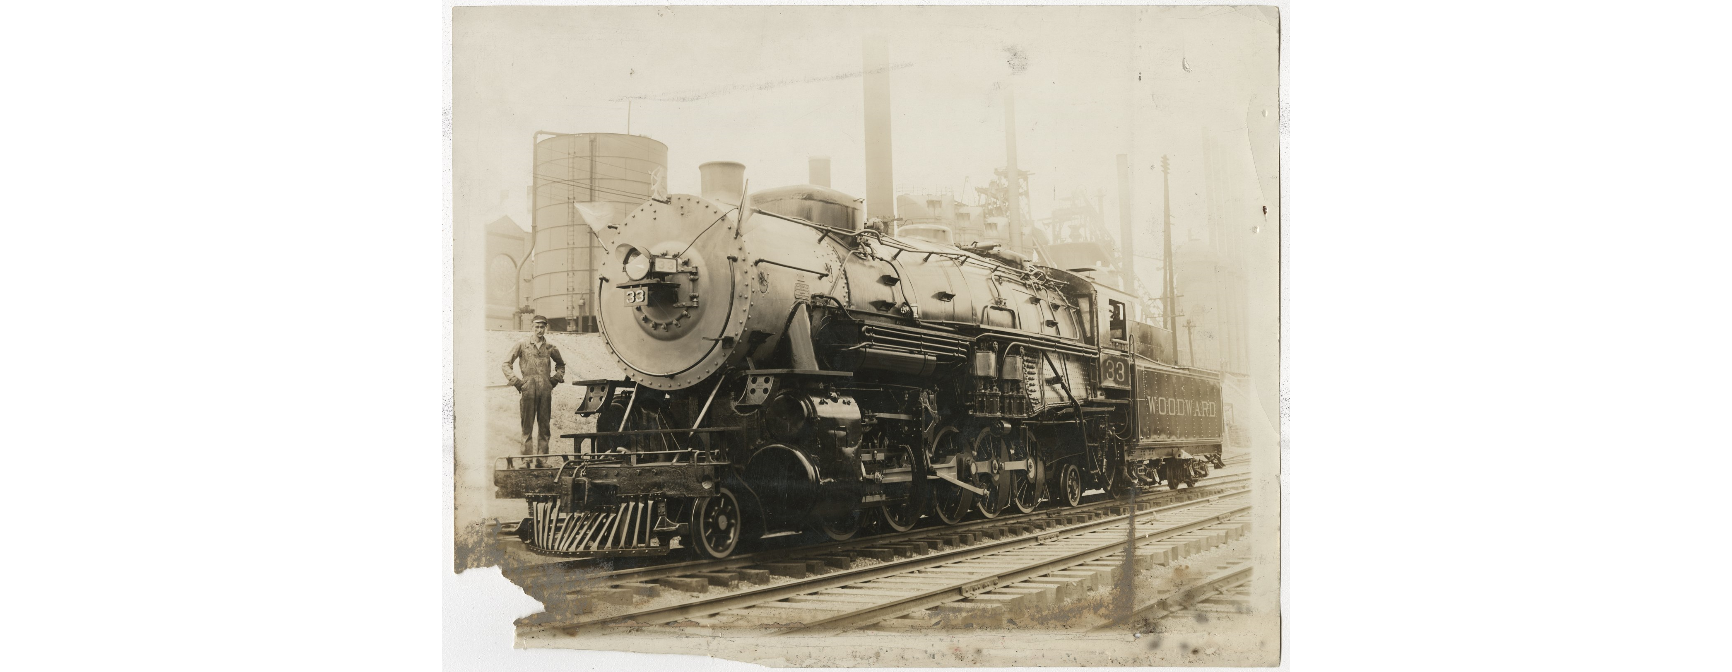 Woodward Train - Engine No. 33